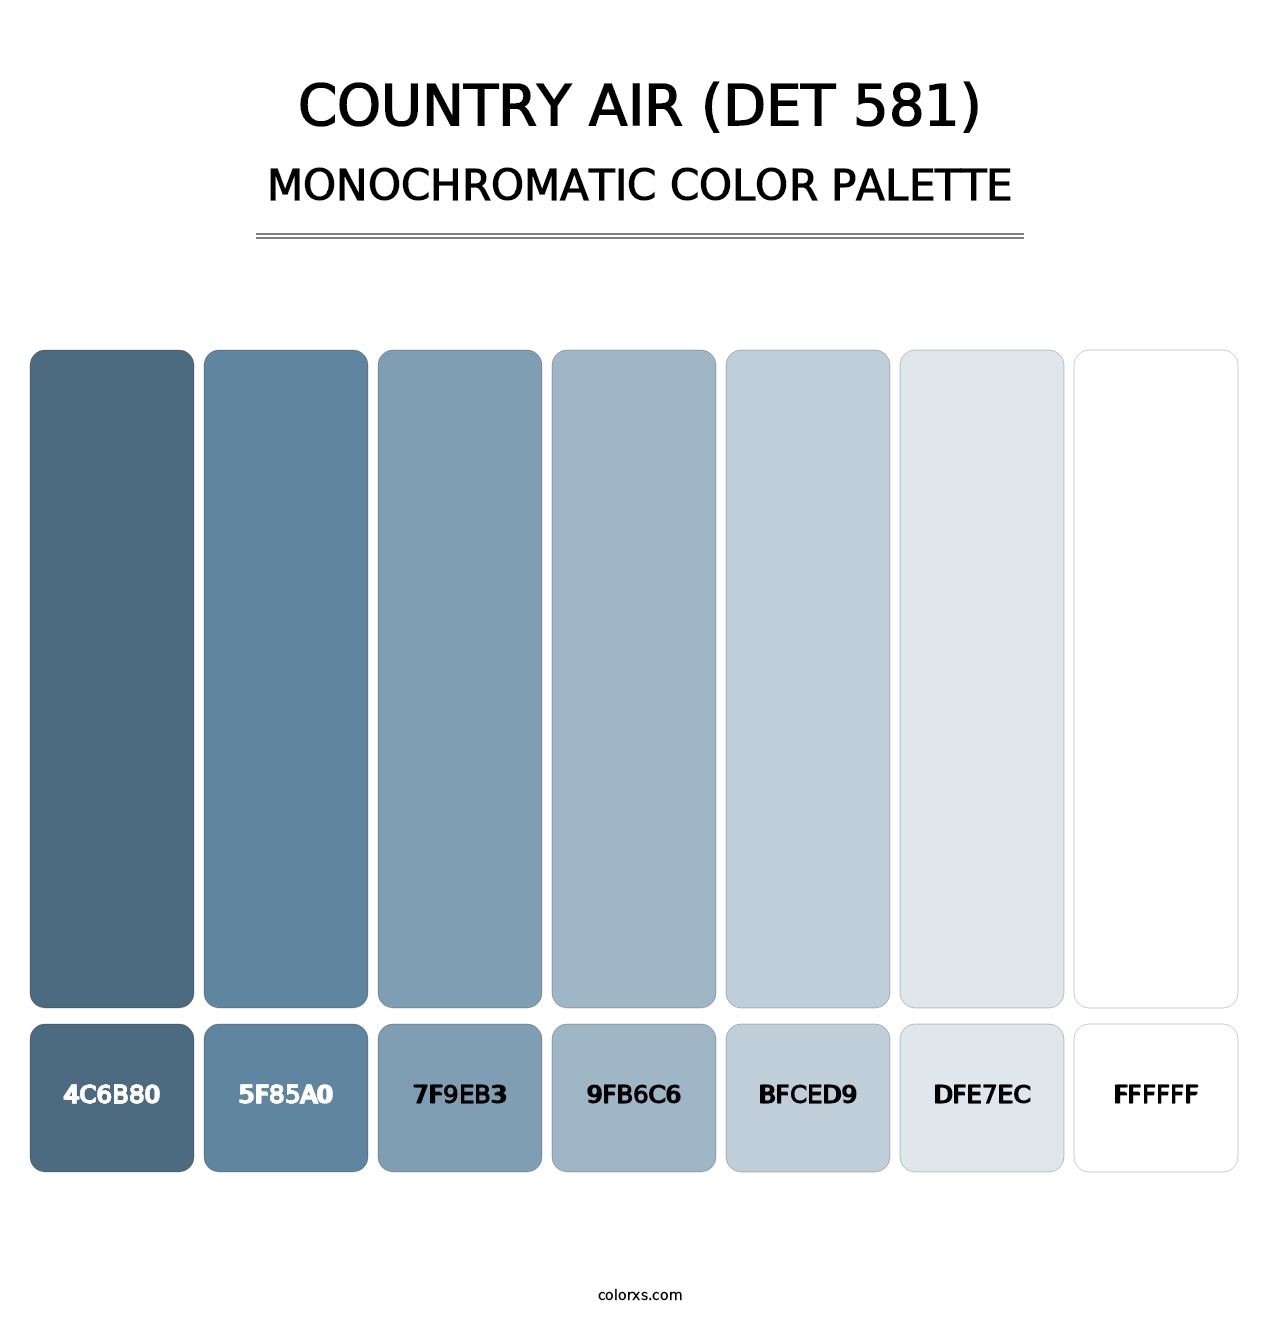 Country Air (DET 581) - Monochromatic Color Palette